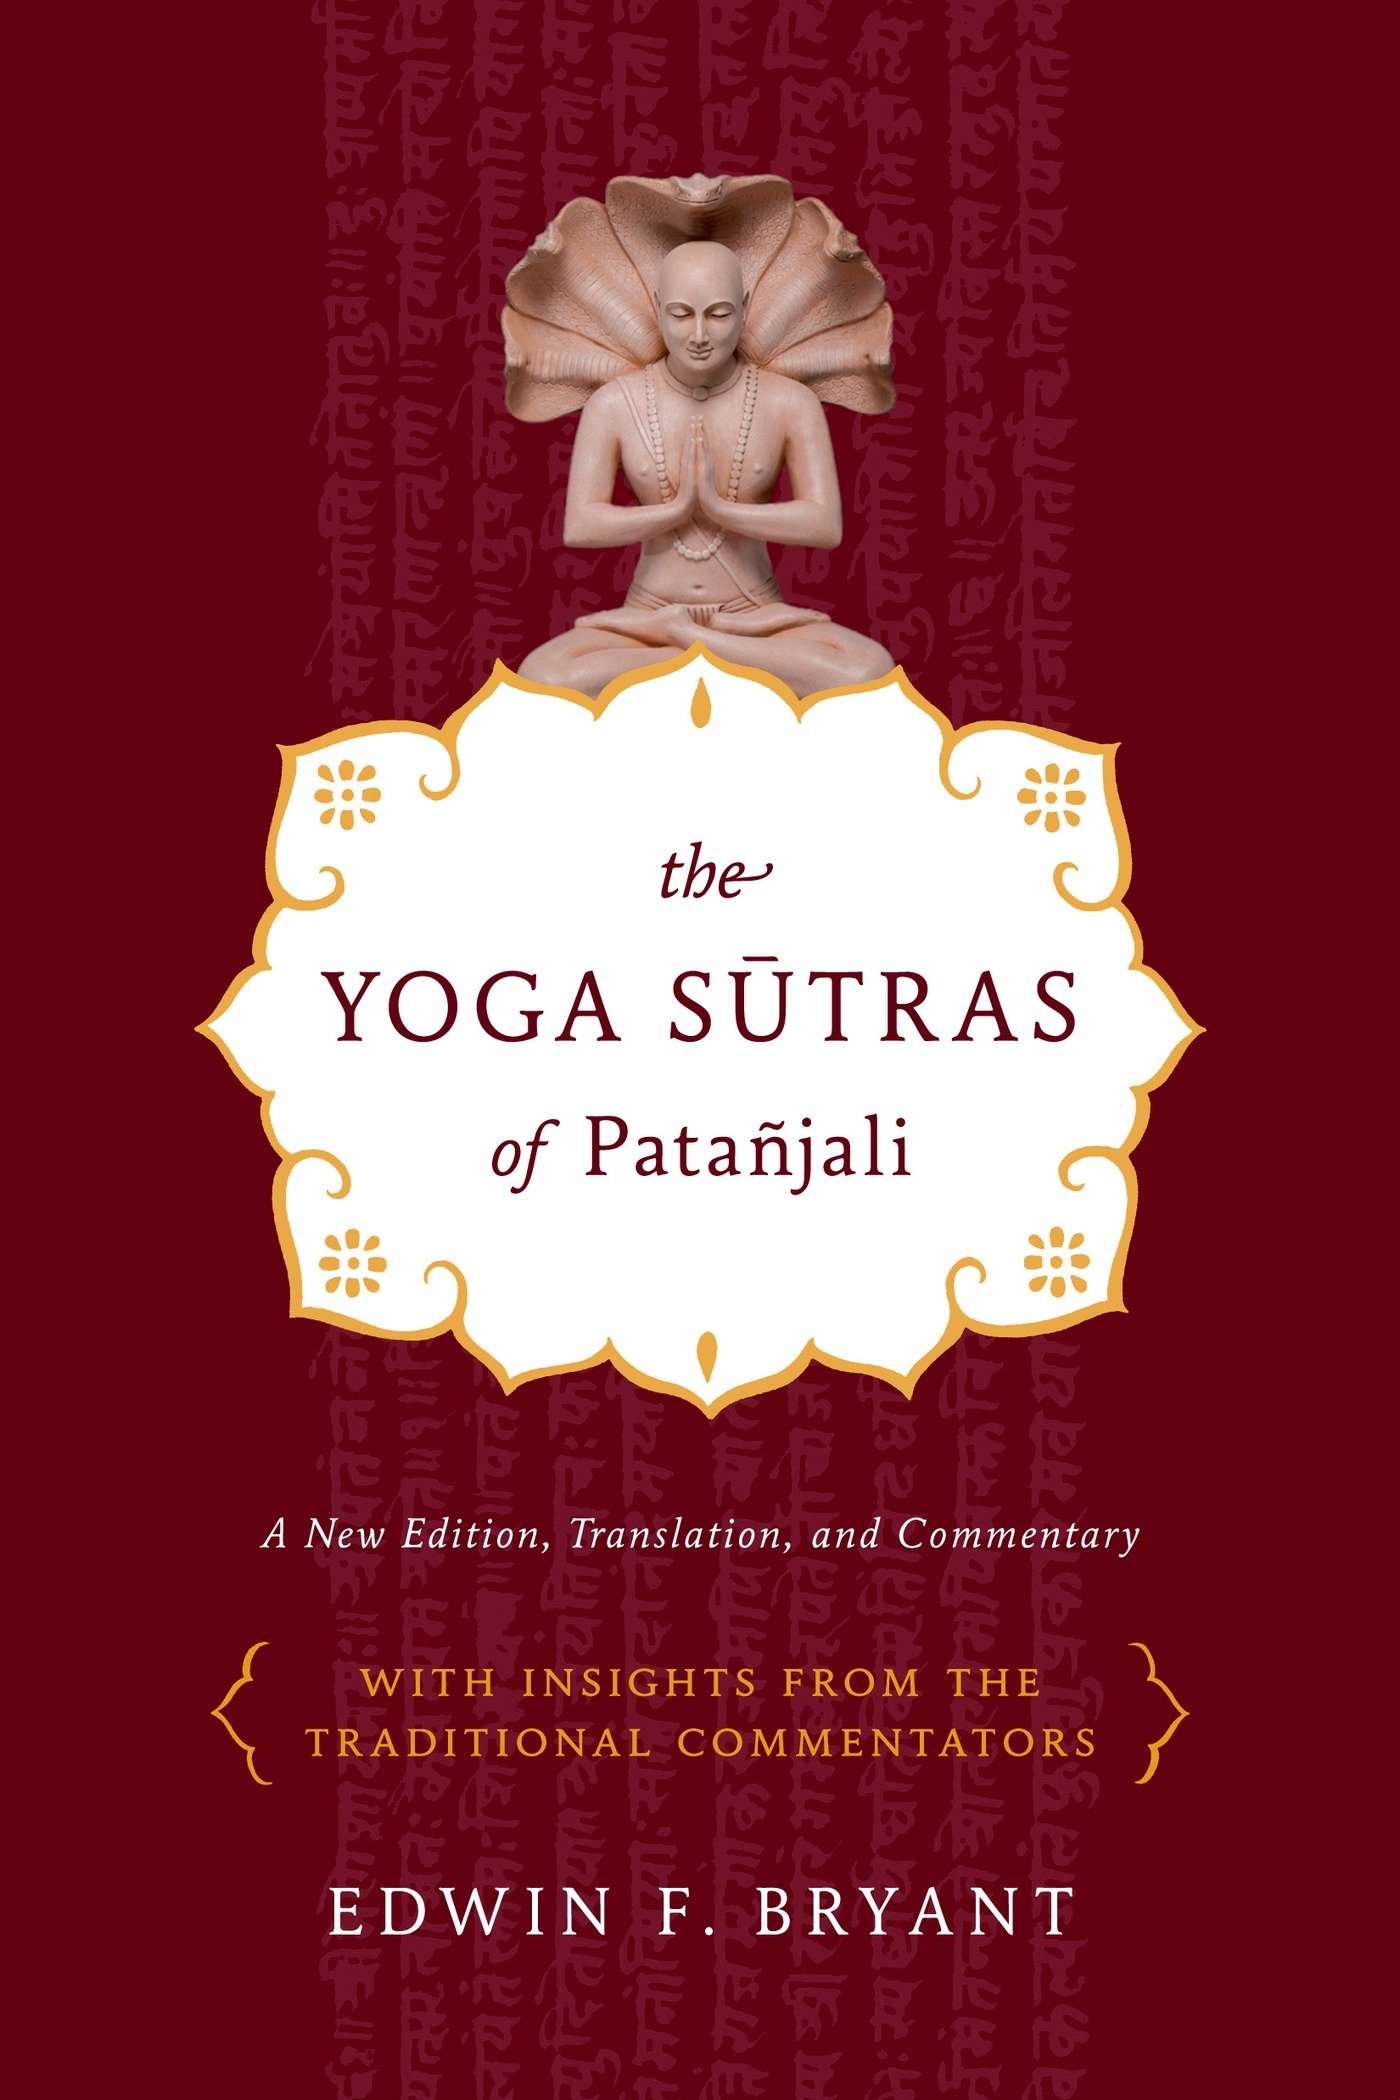 Patanjali Yoga Sutras In Sanskrit Pdf